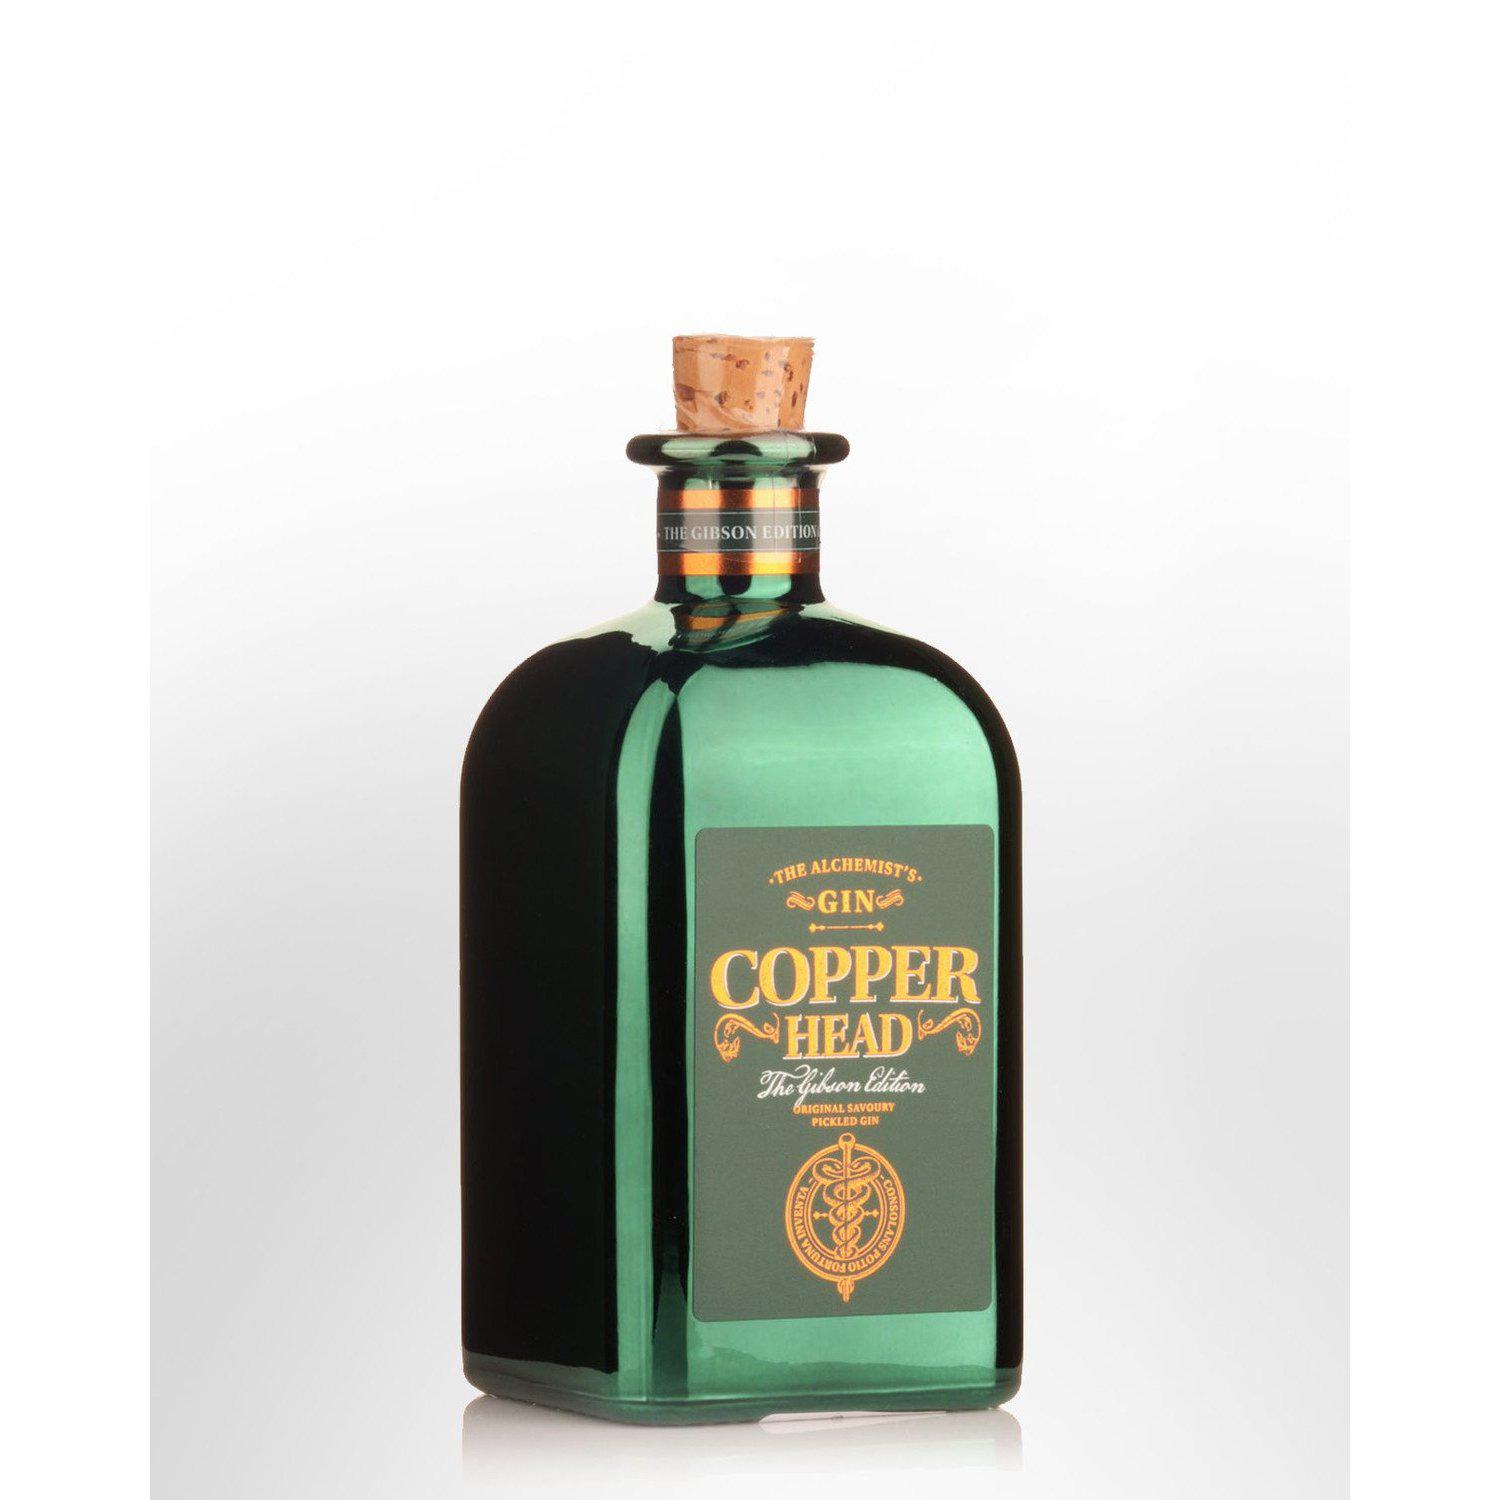 Copperhead The Alchemist's Gibson Edition Gin 500ml